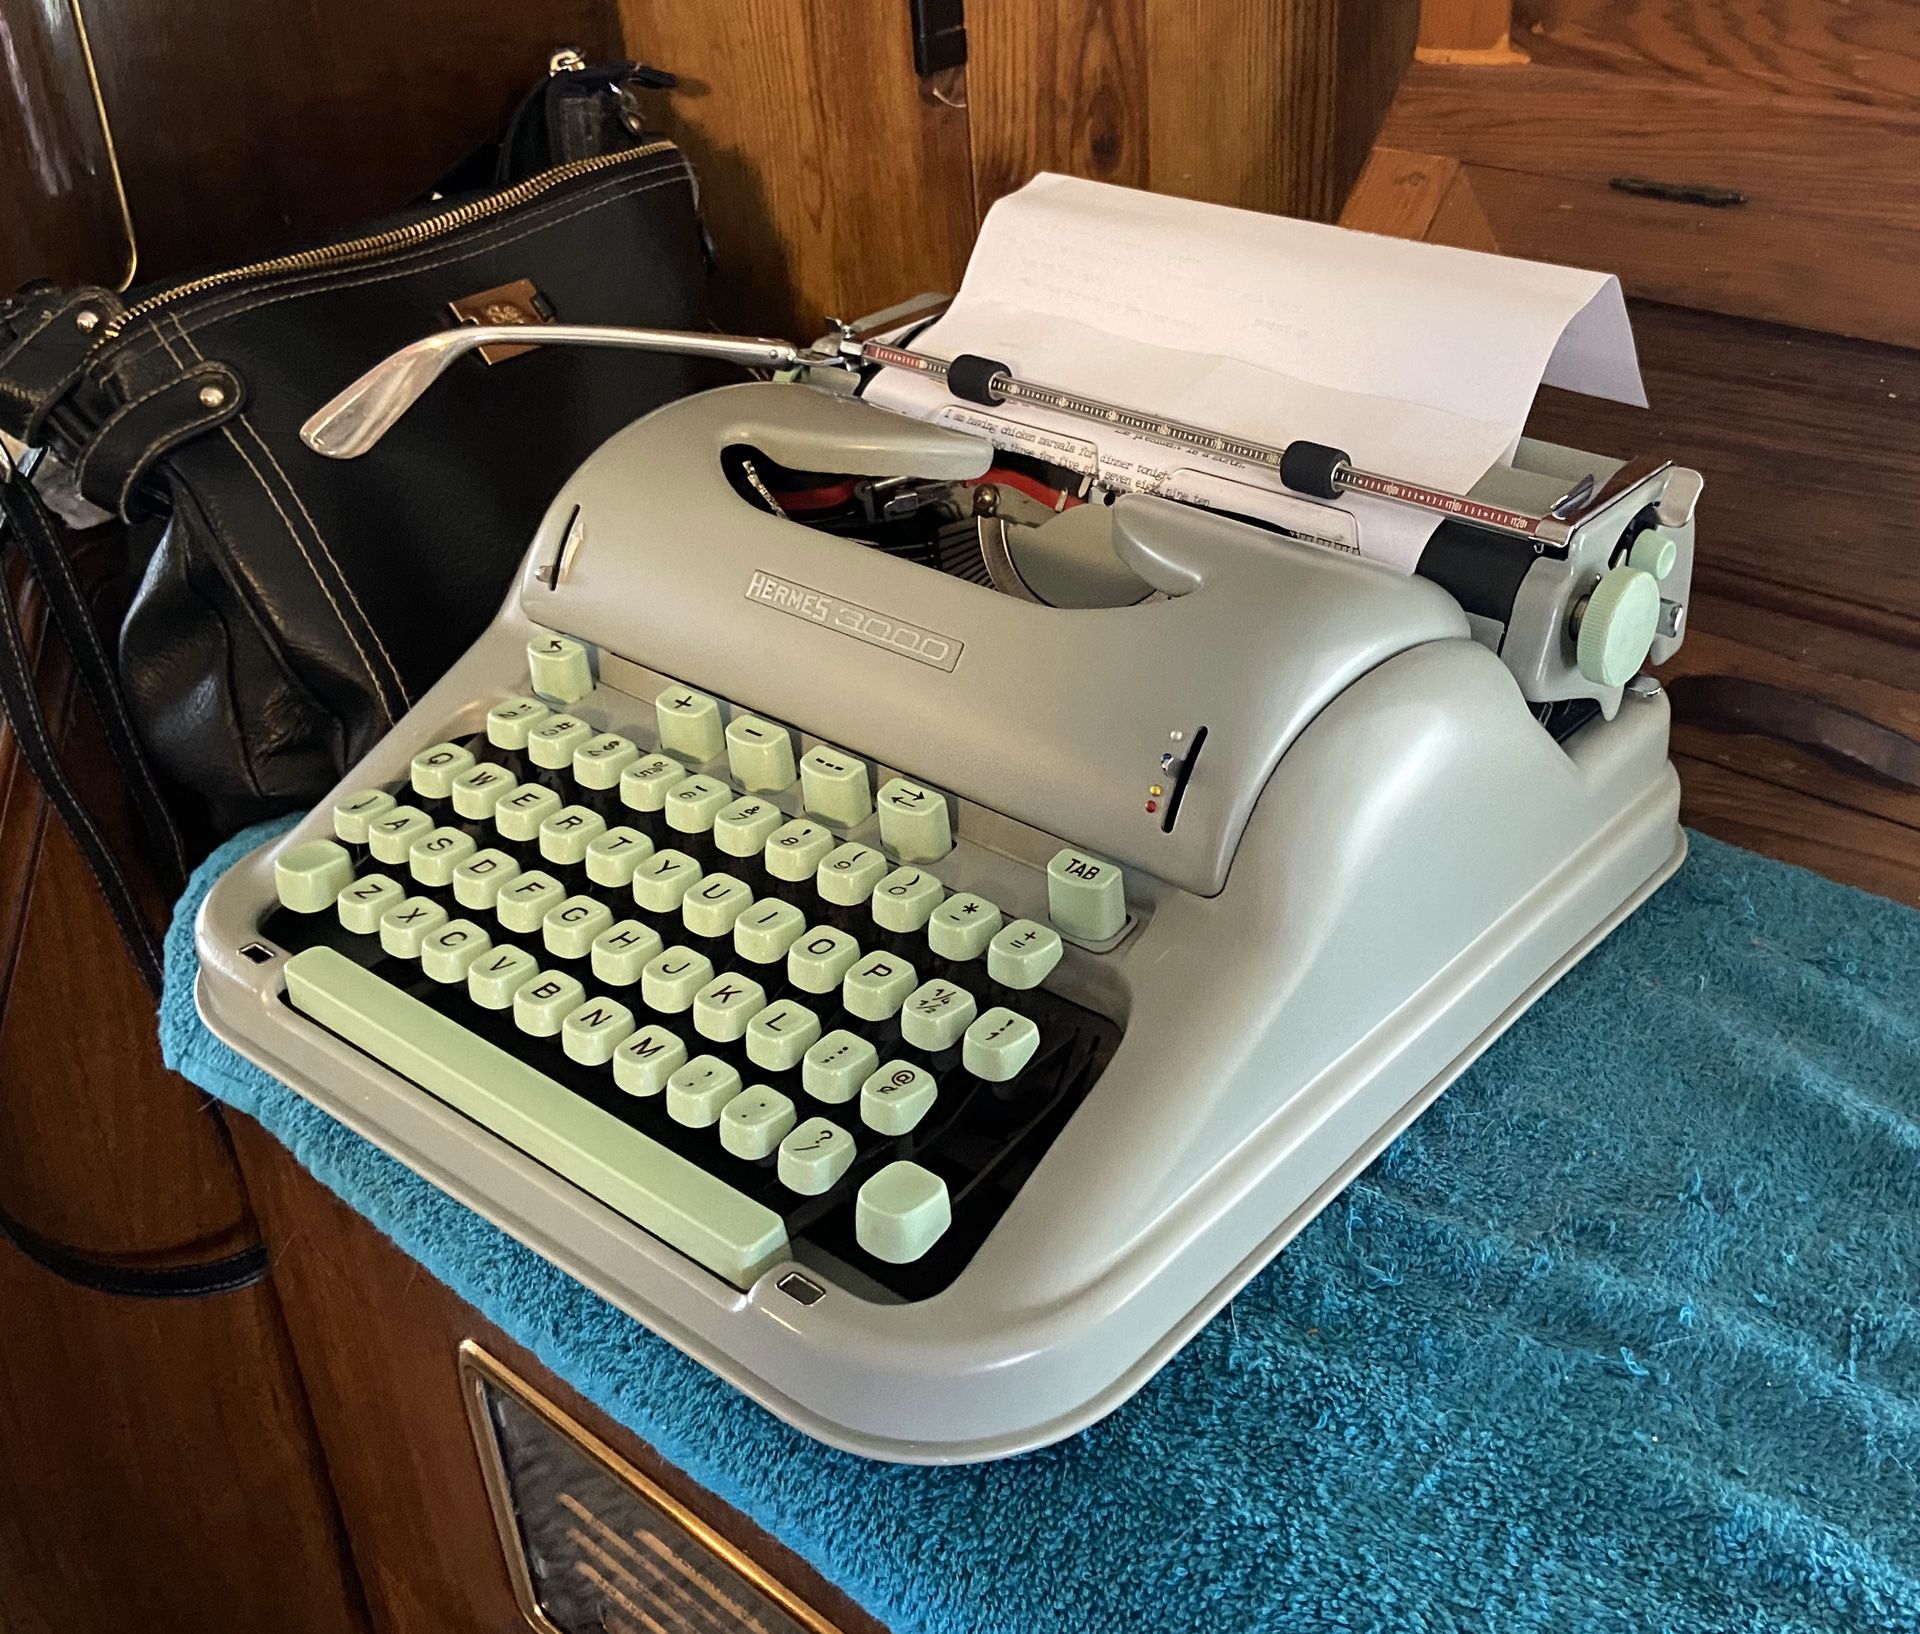 Hermès 3000 Typewriter. Excellent condition. No issues